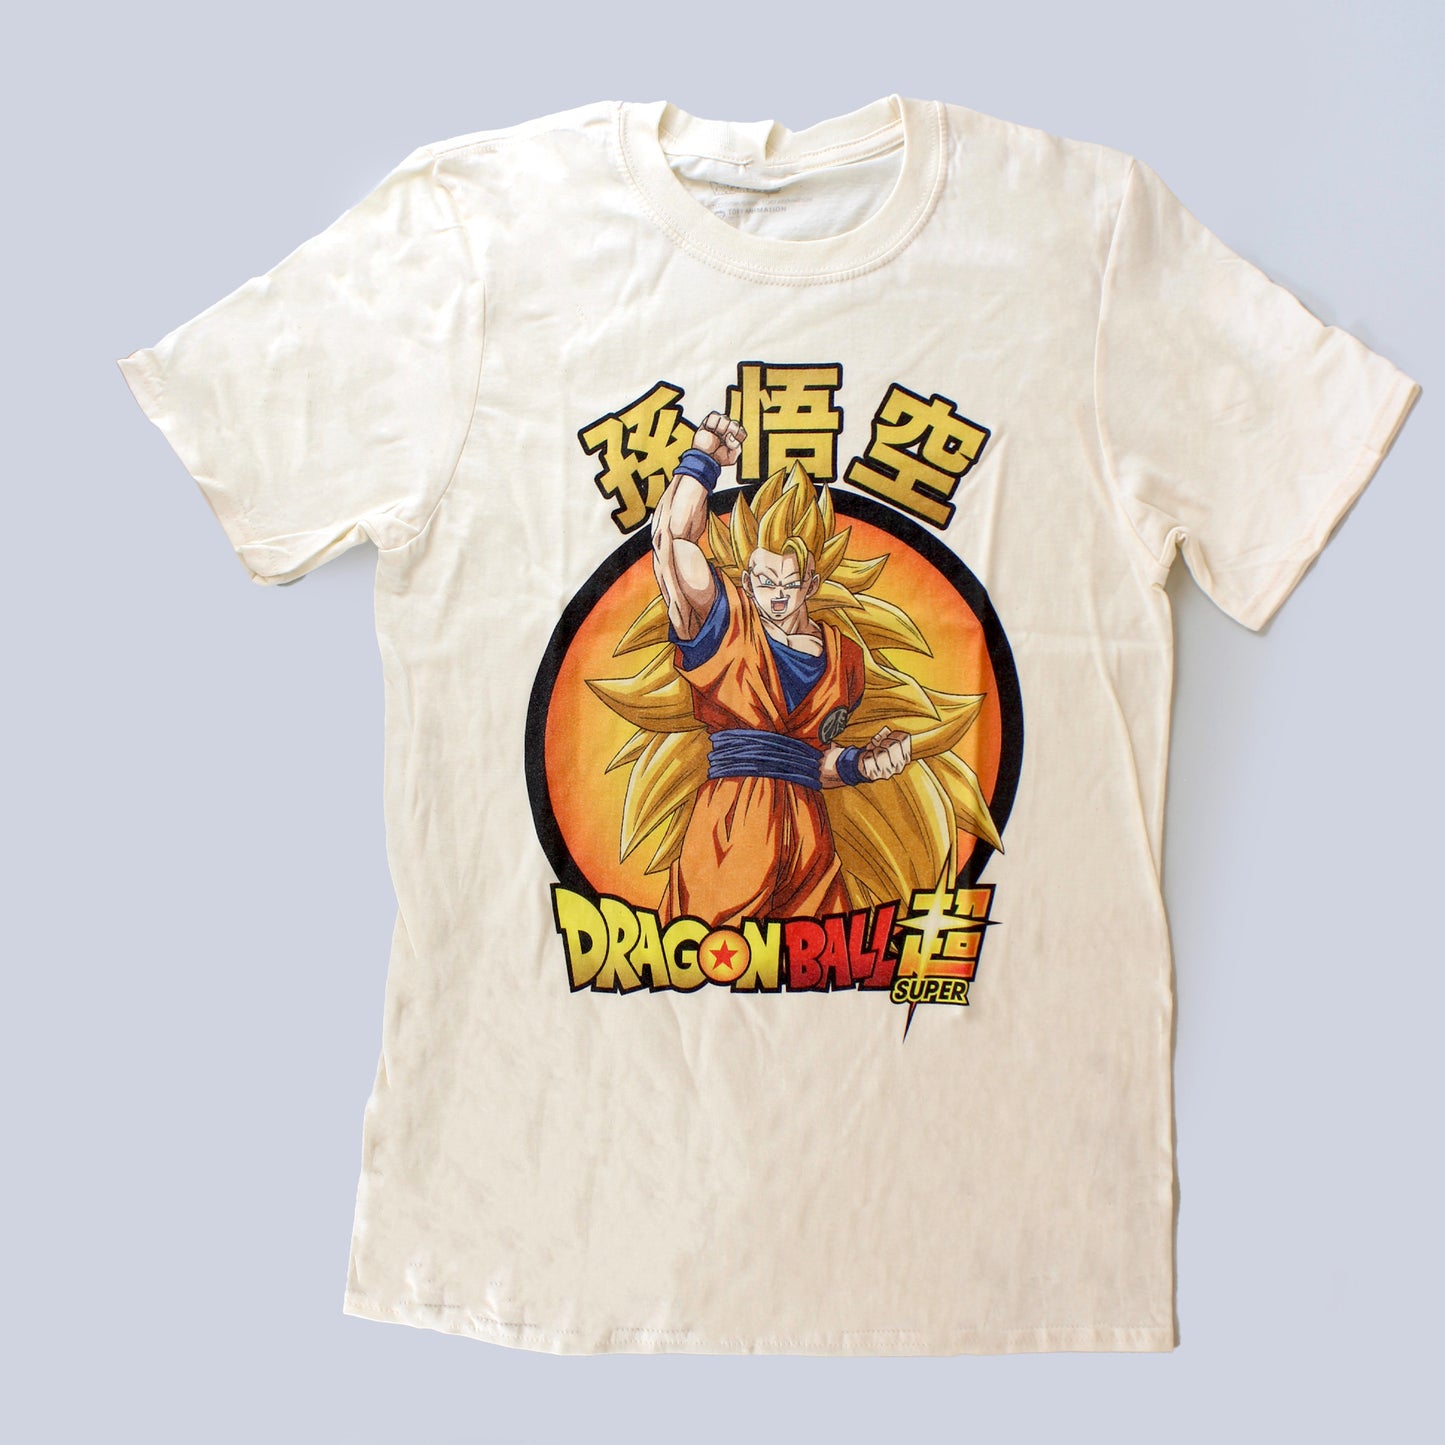 Super Saiyan 3 Goku (Dragon Ball Super) Unisex Shirt